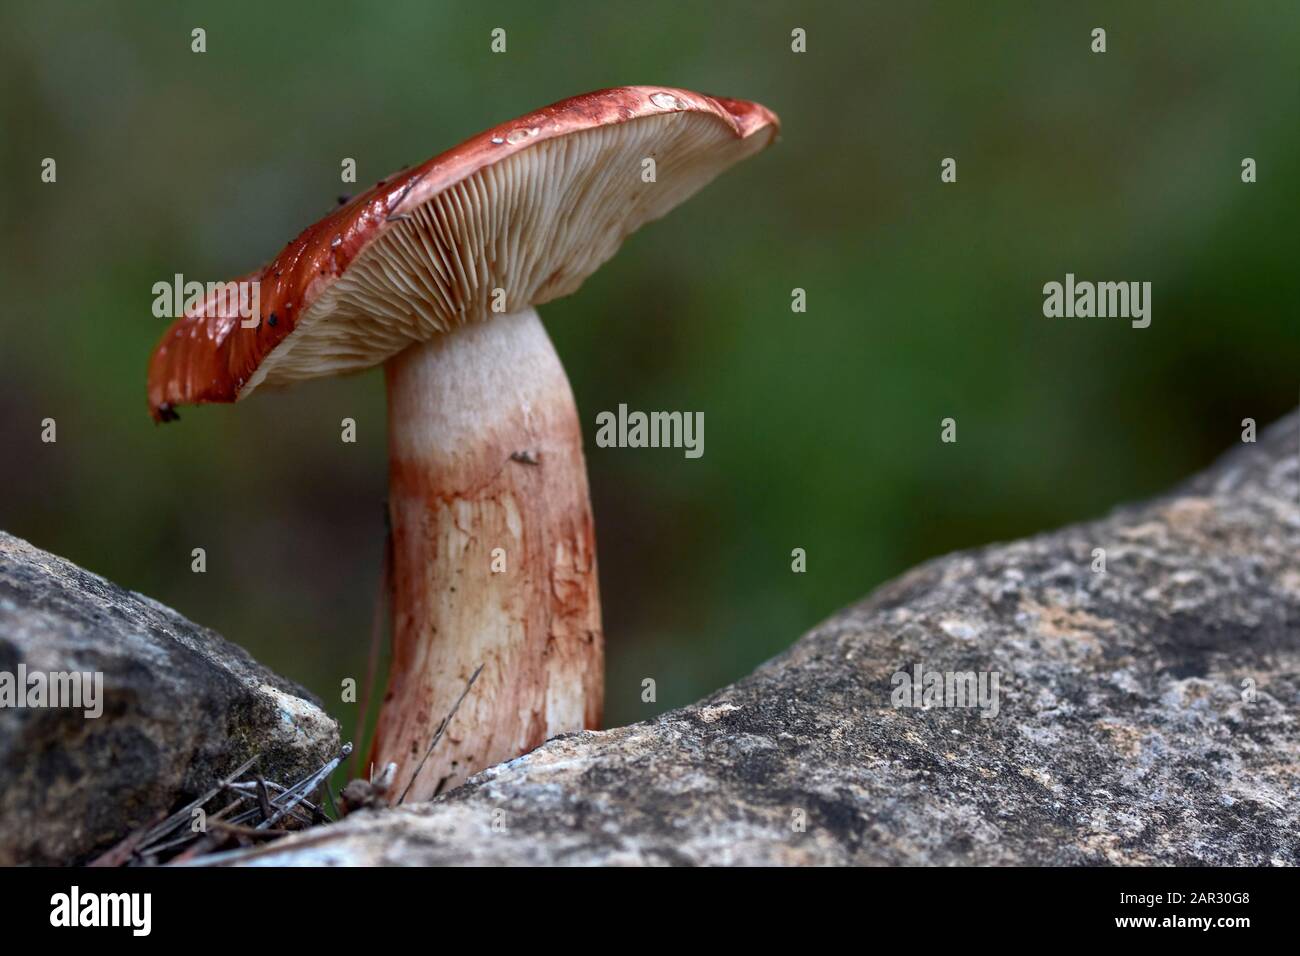 Russula sanguinea mushroom Stock Photo